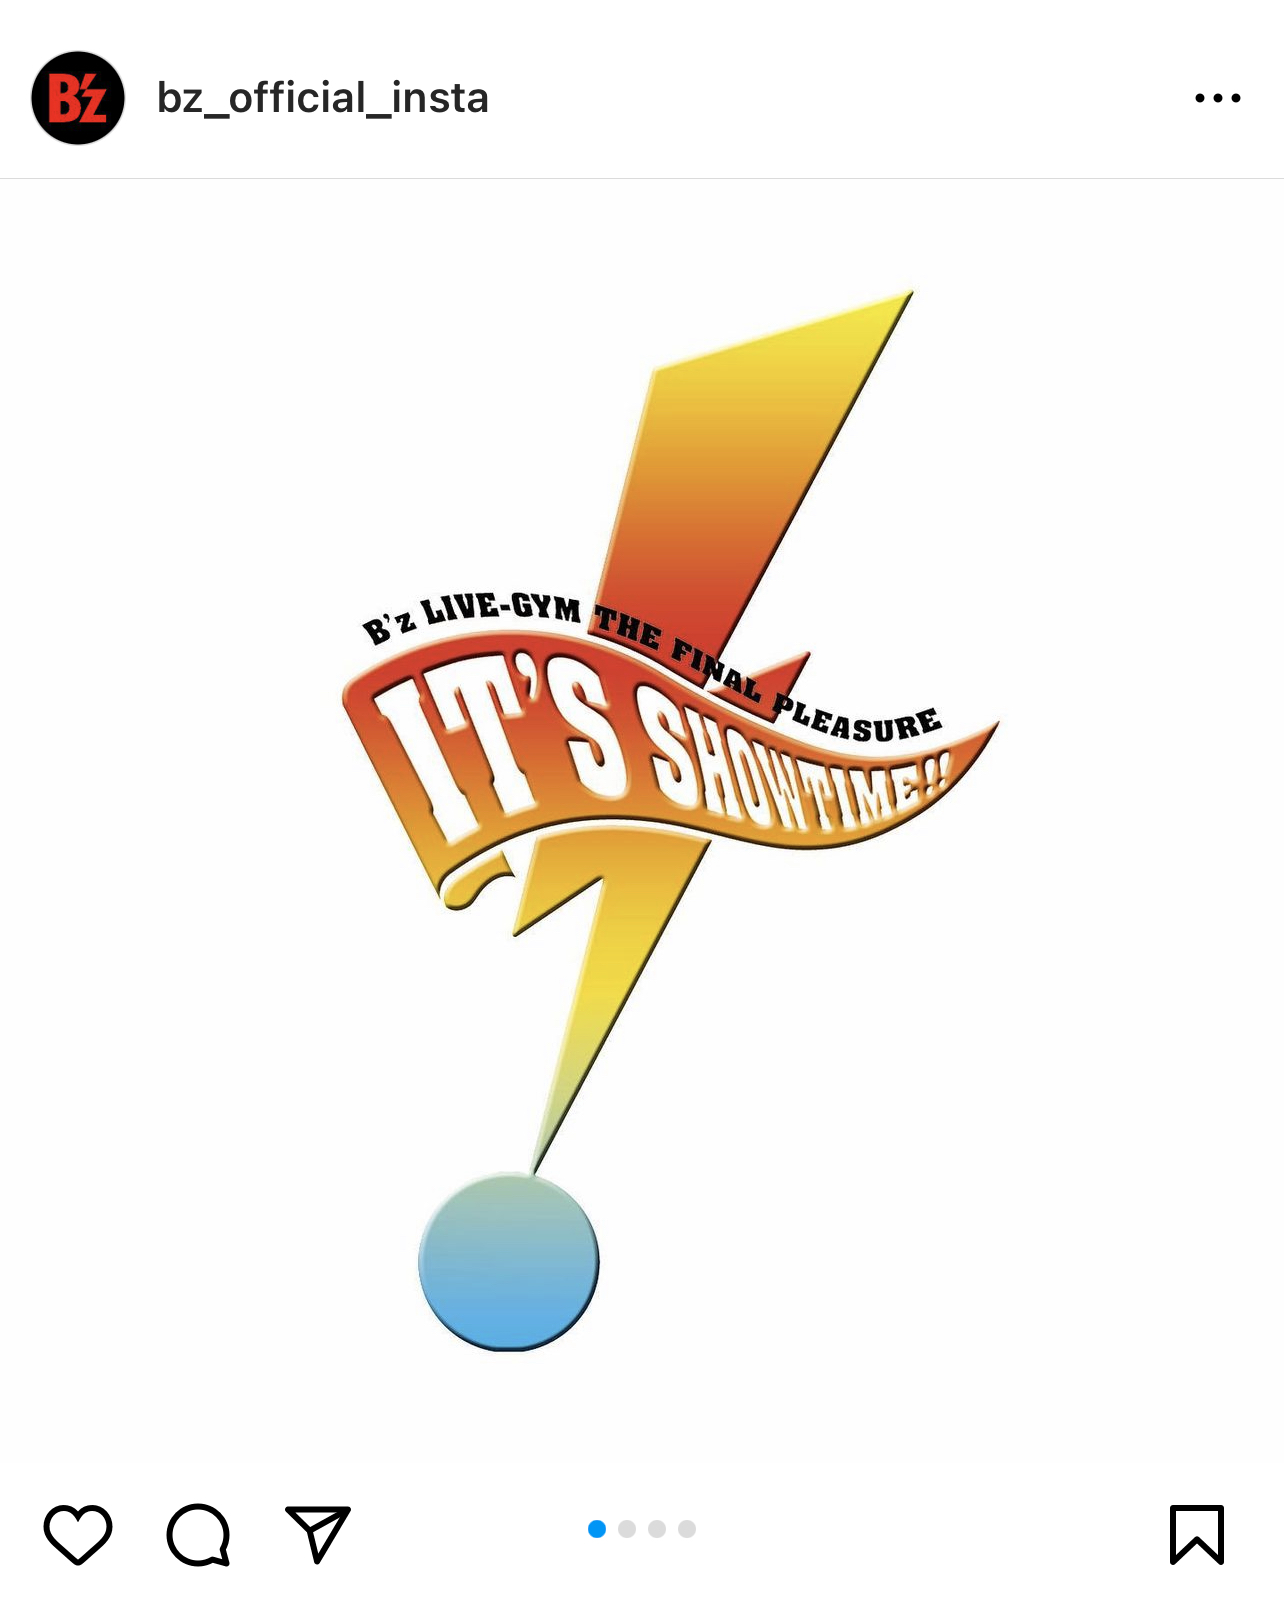 『B’z LIVE-GYM The Final Pleasure “IT’S SHOWTIME!!”』のロゴマークの投稿画像